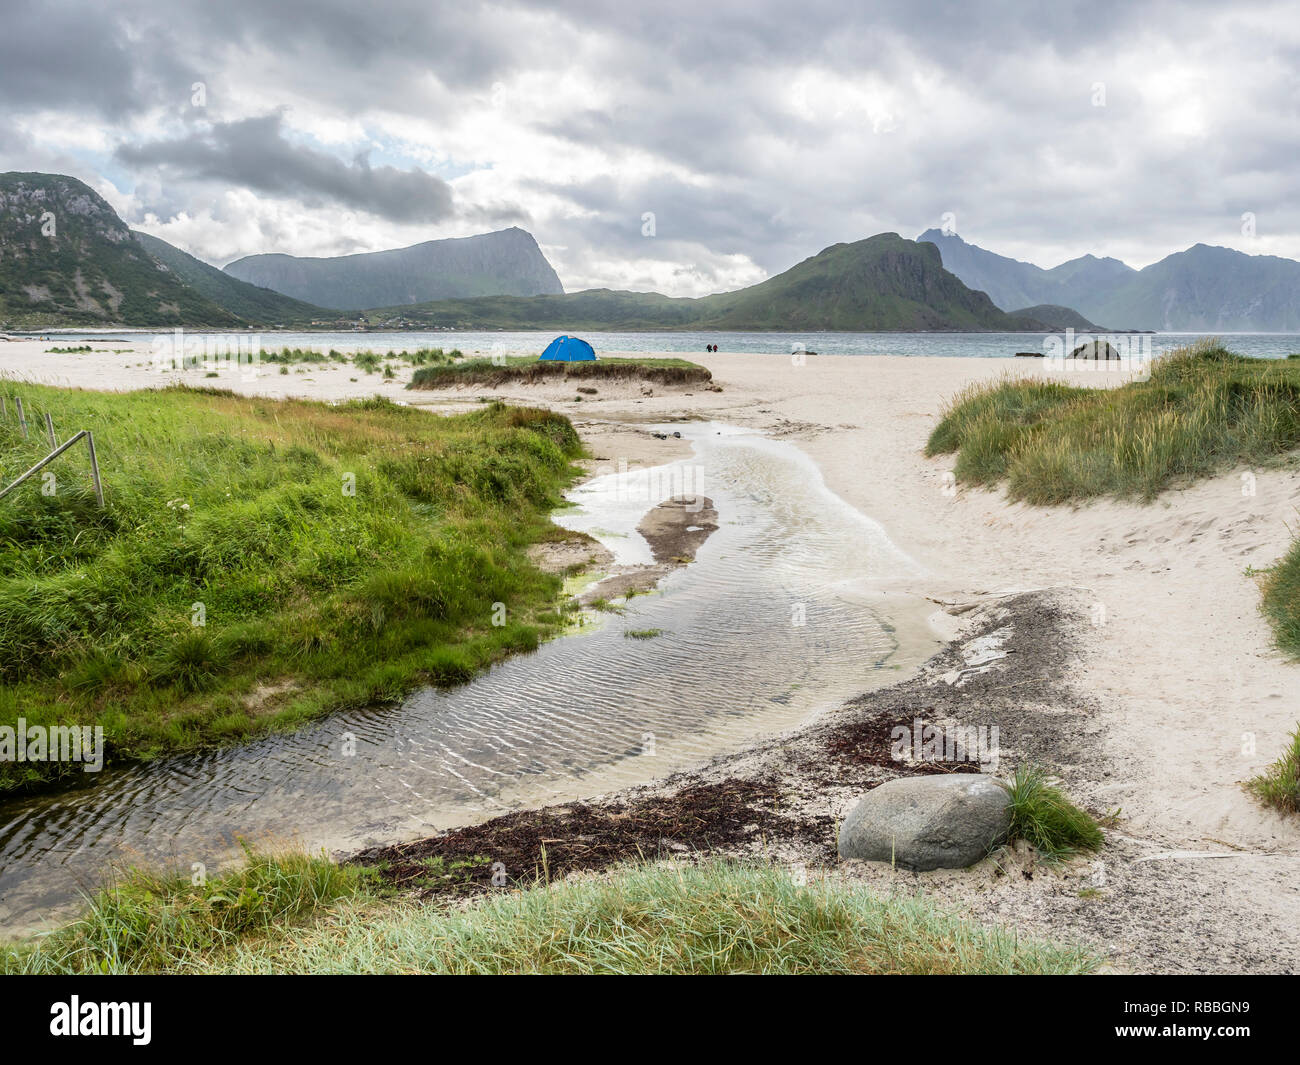 Hauklandstranda, Haukland beach, solitario tenda sulla spiaggia sabbiosa, isola Vestvagöy, Lofoten, Norvegia Foto Stock